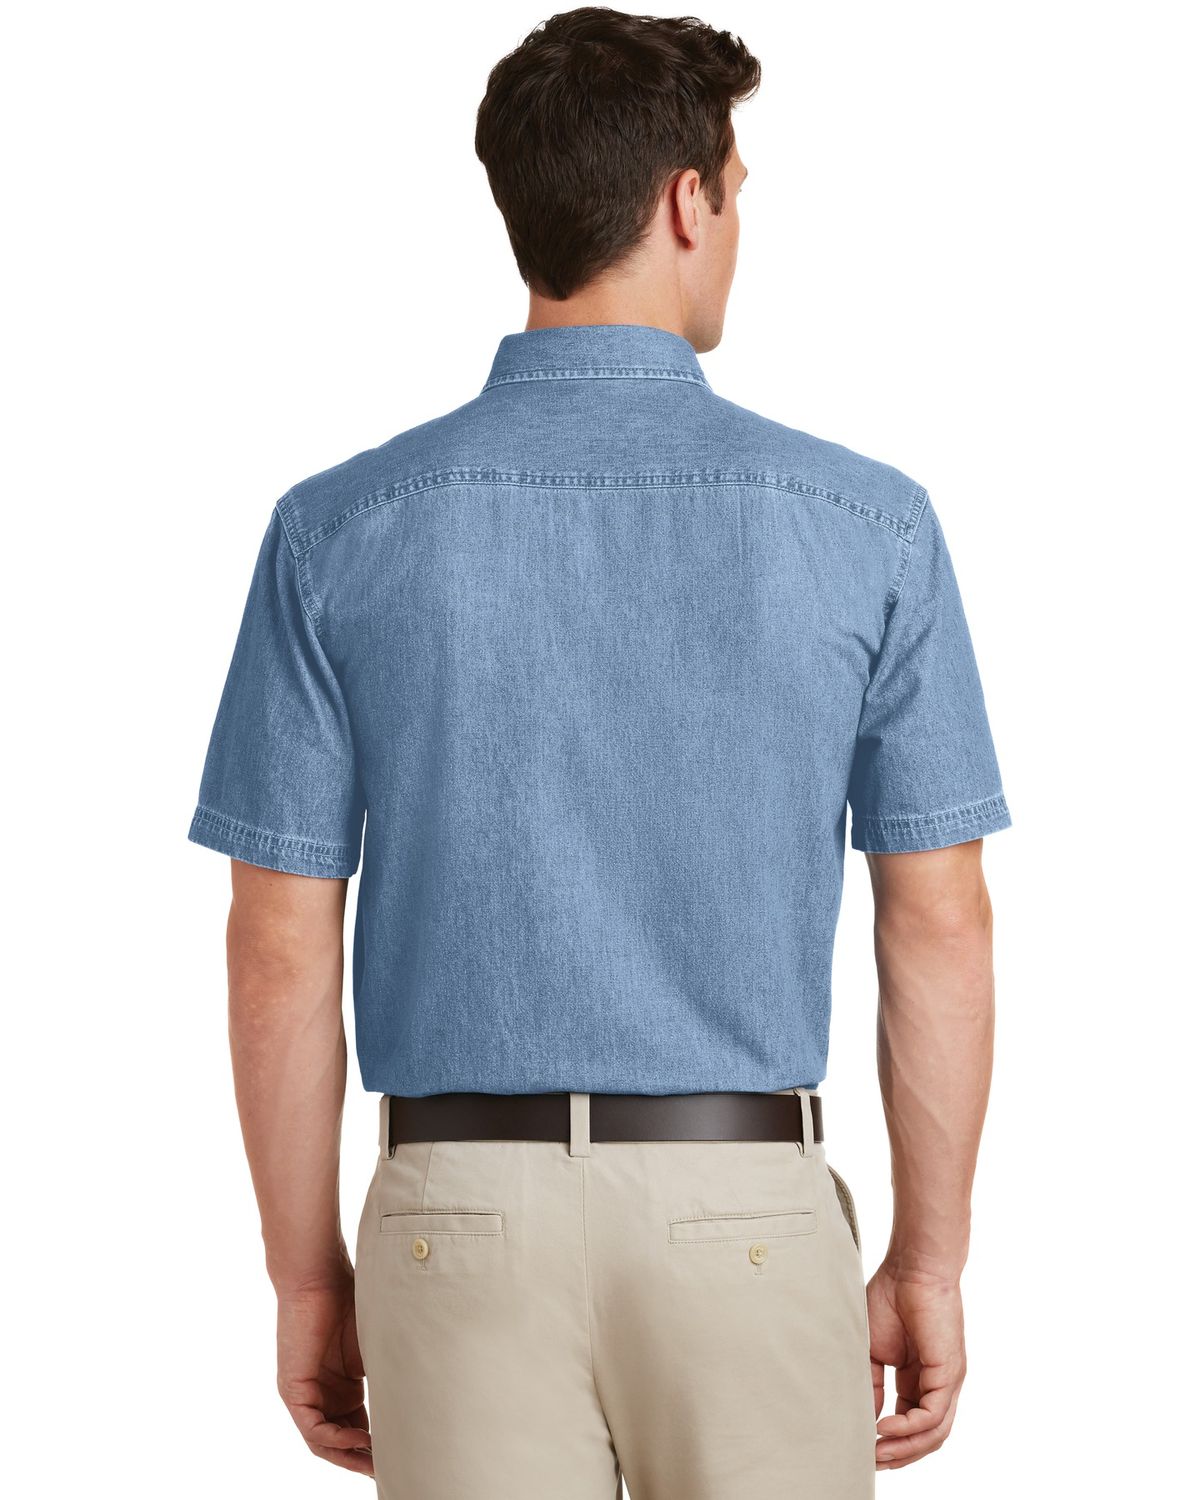 'Port & Company SP11 Men’s Short Sleeve Value Denim Shirt'